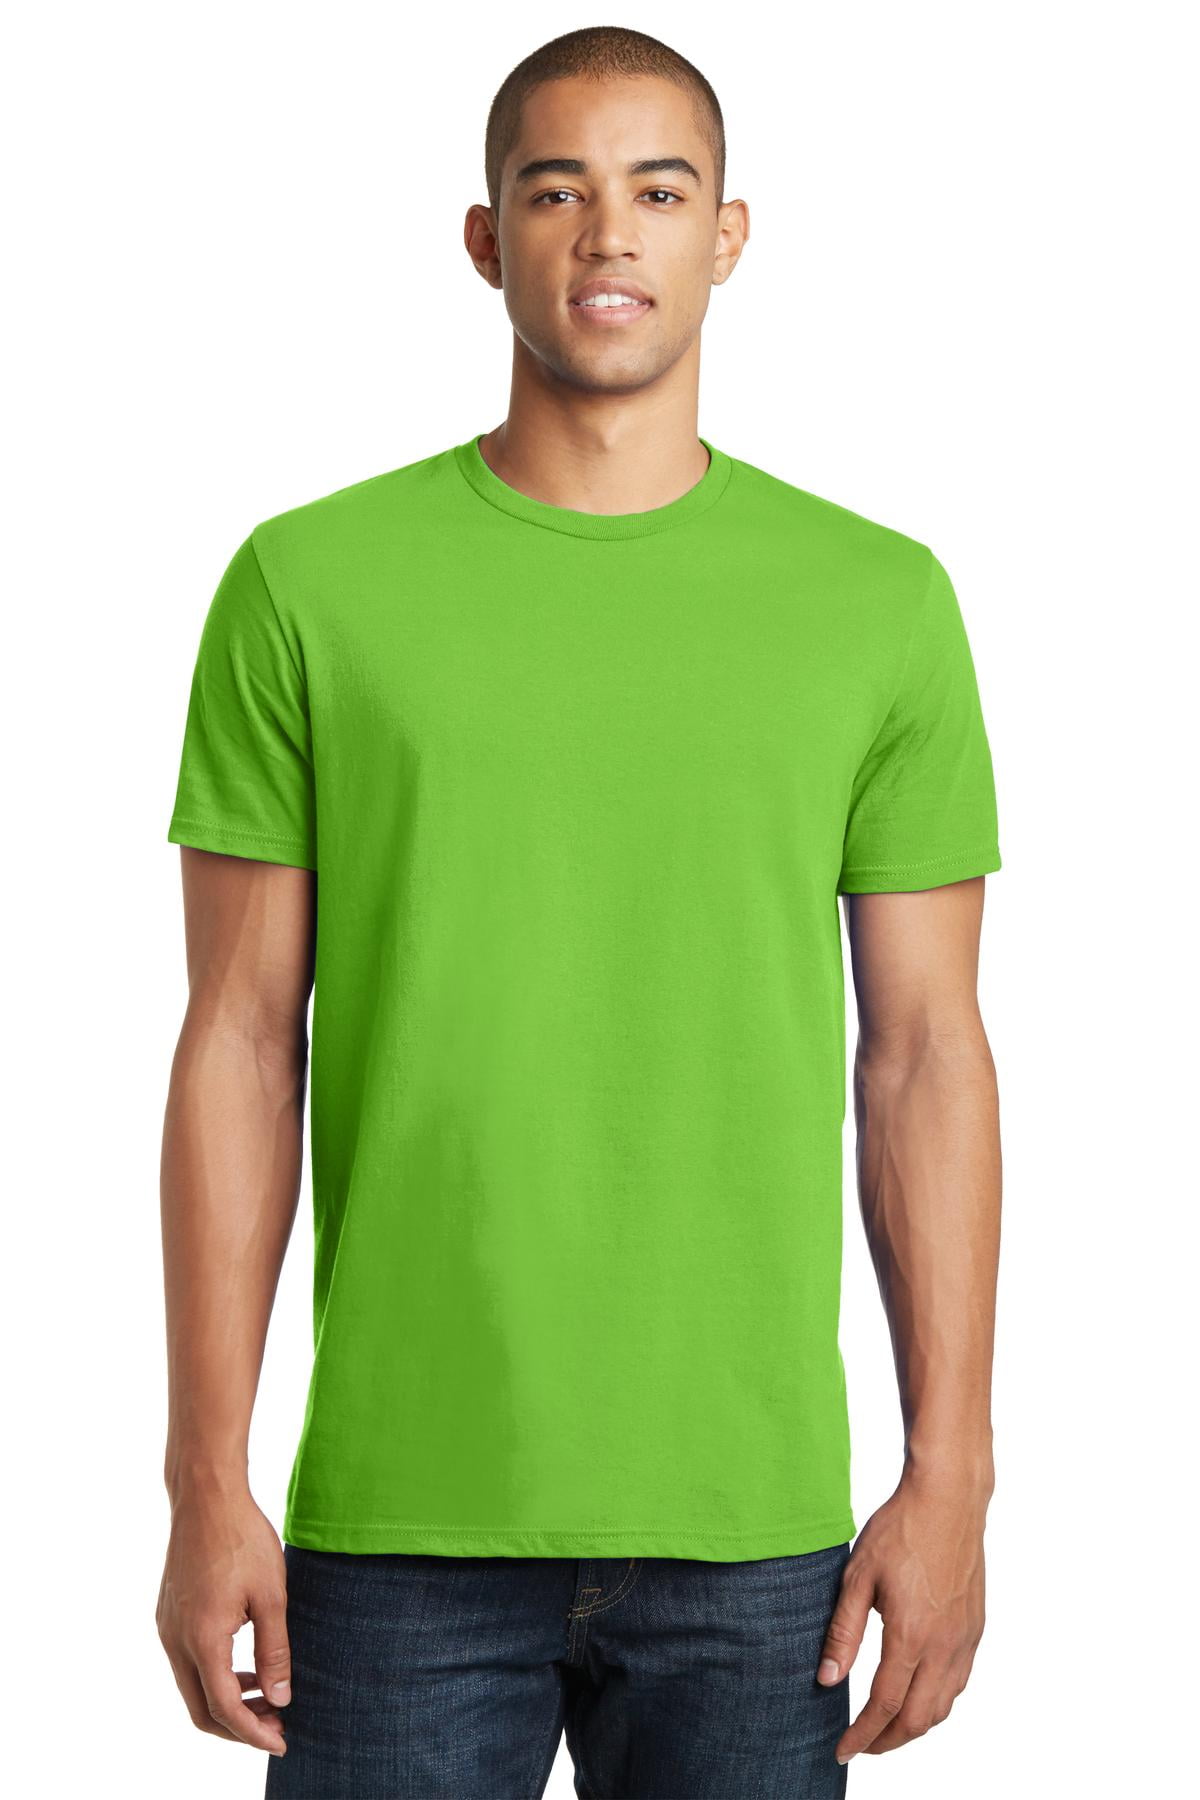 neon green adidas t shirt